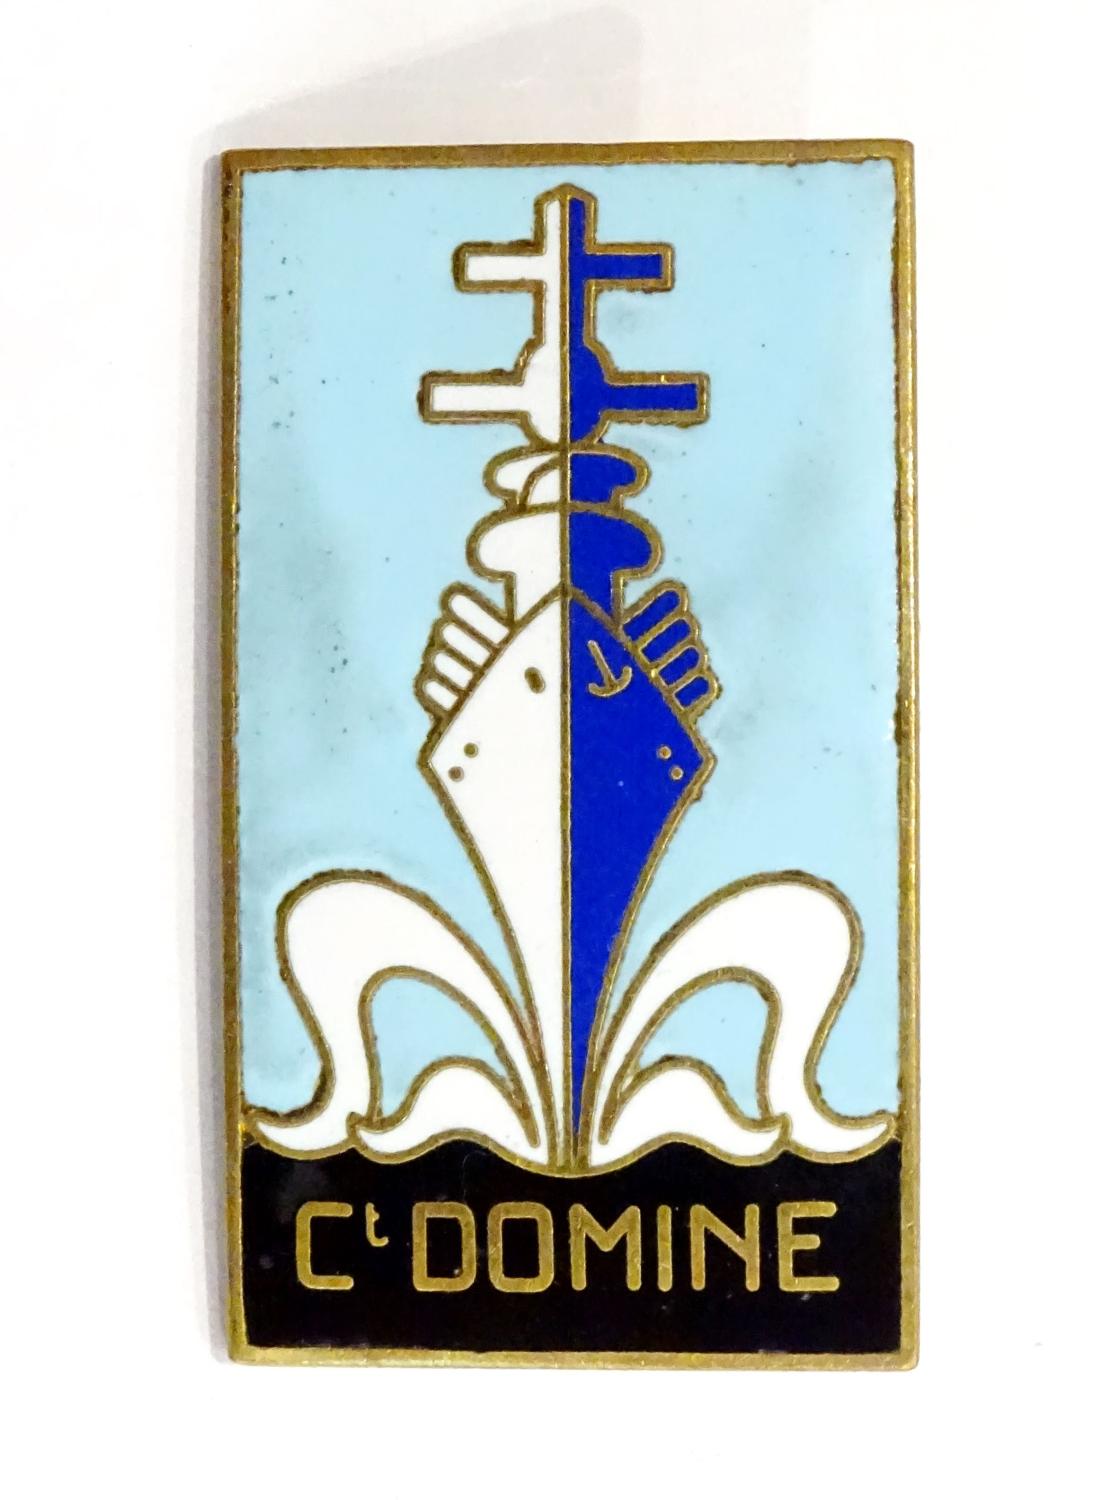 Insigne Aviso dragueur Commandant Domine Augis